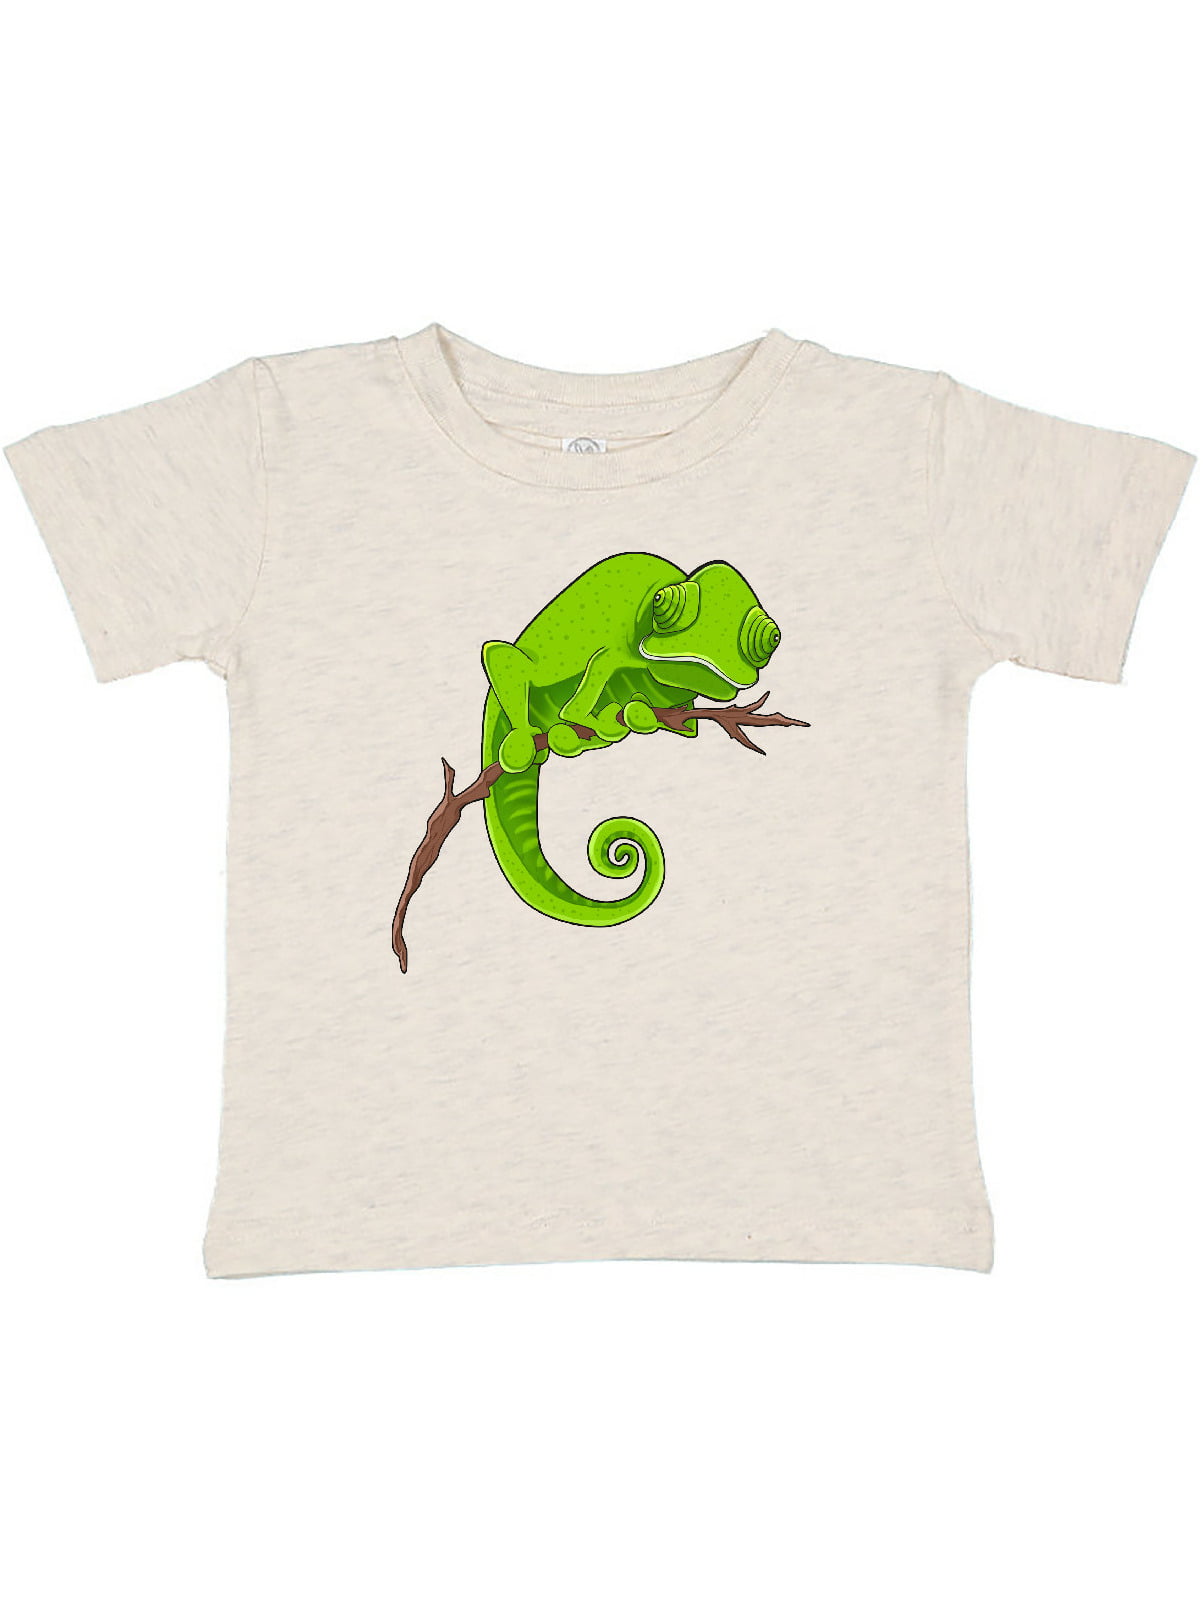 You Not So Much T-Shirt  Chameleon Lover Gift  Make Me Happy  You Not So Much  Reptile Lover  Gift For Chameleons Make Me Happy